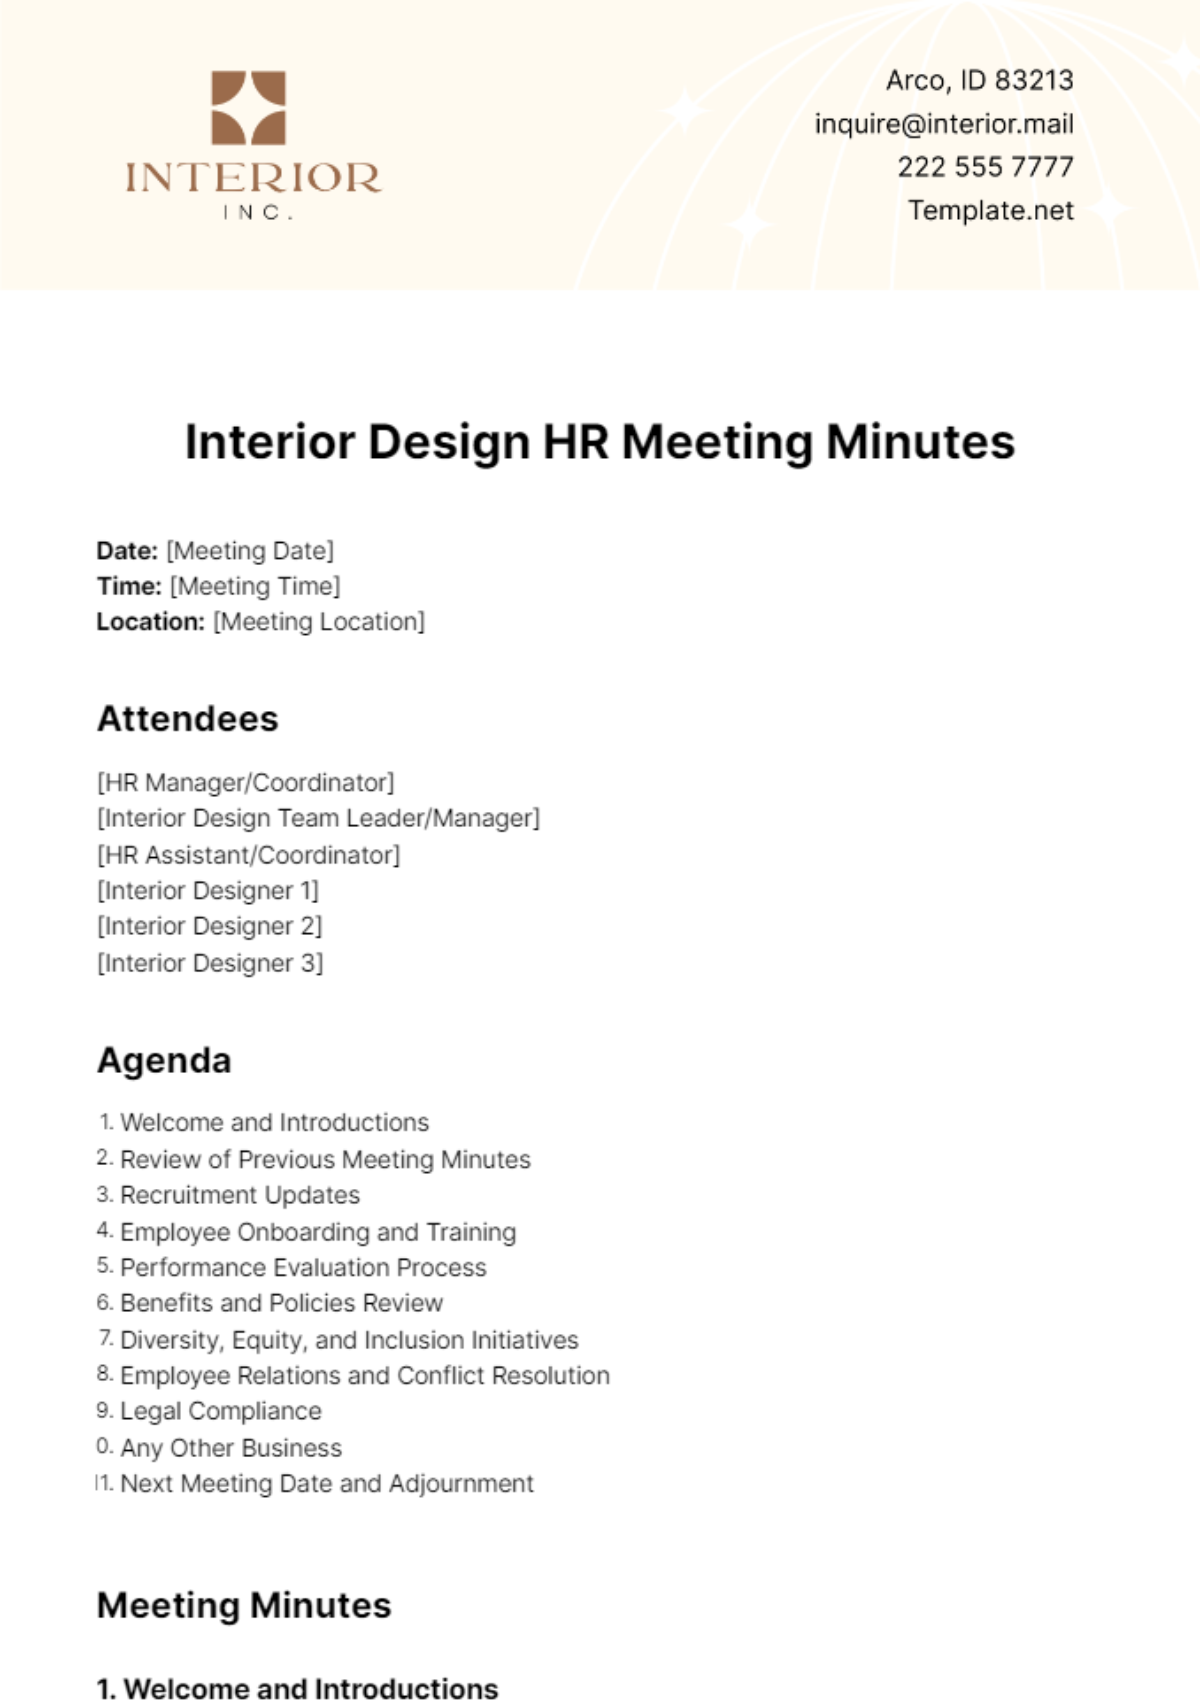 Interior Design HR Meeting Minutes Template